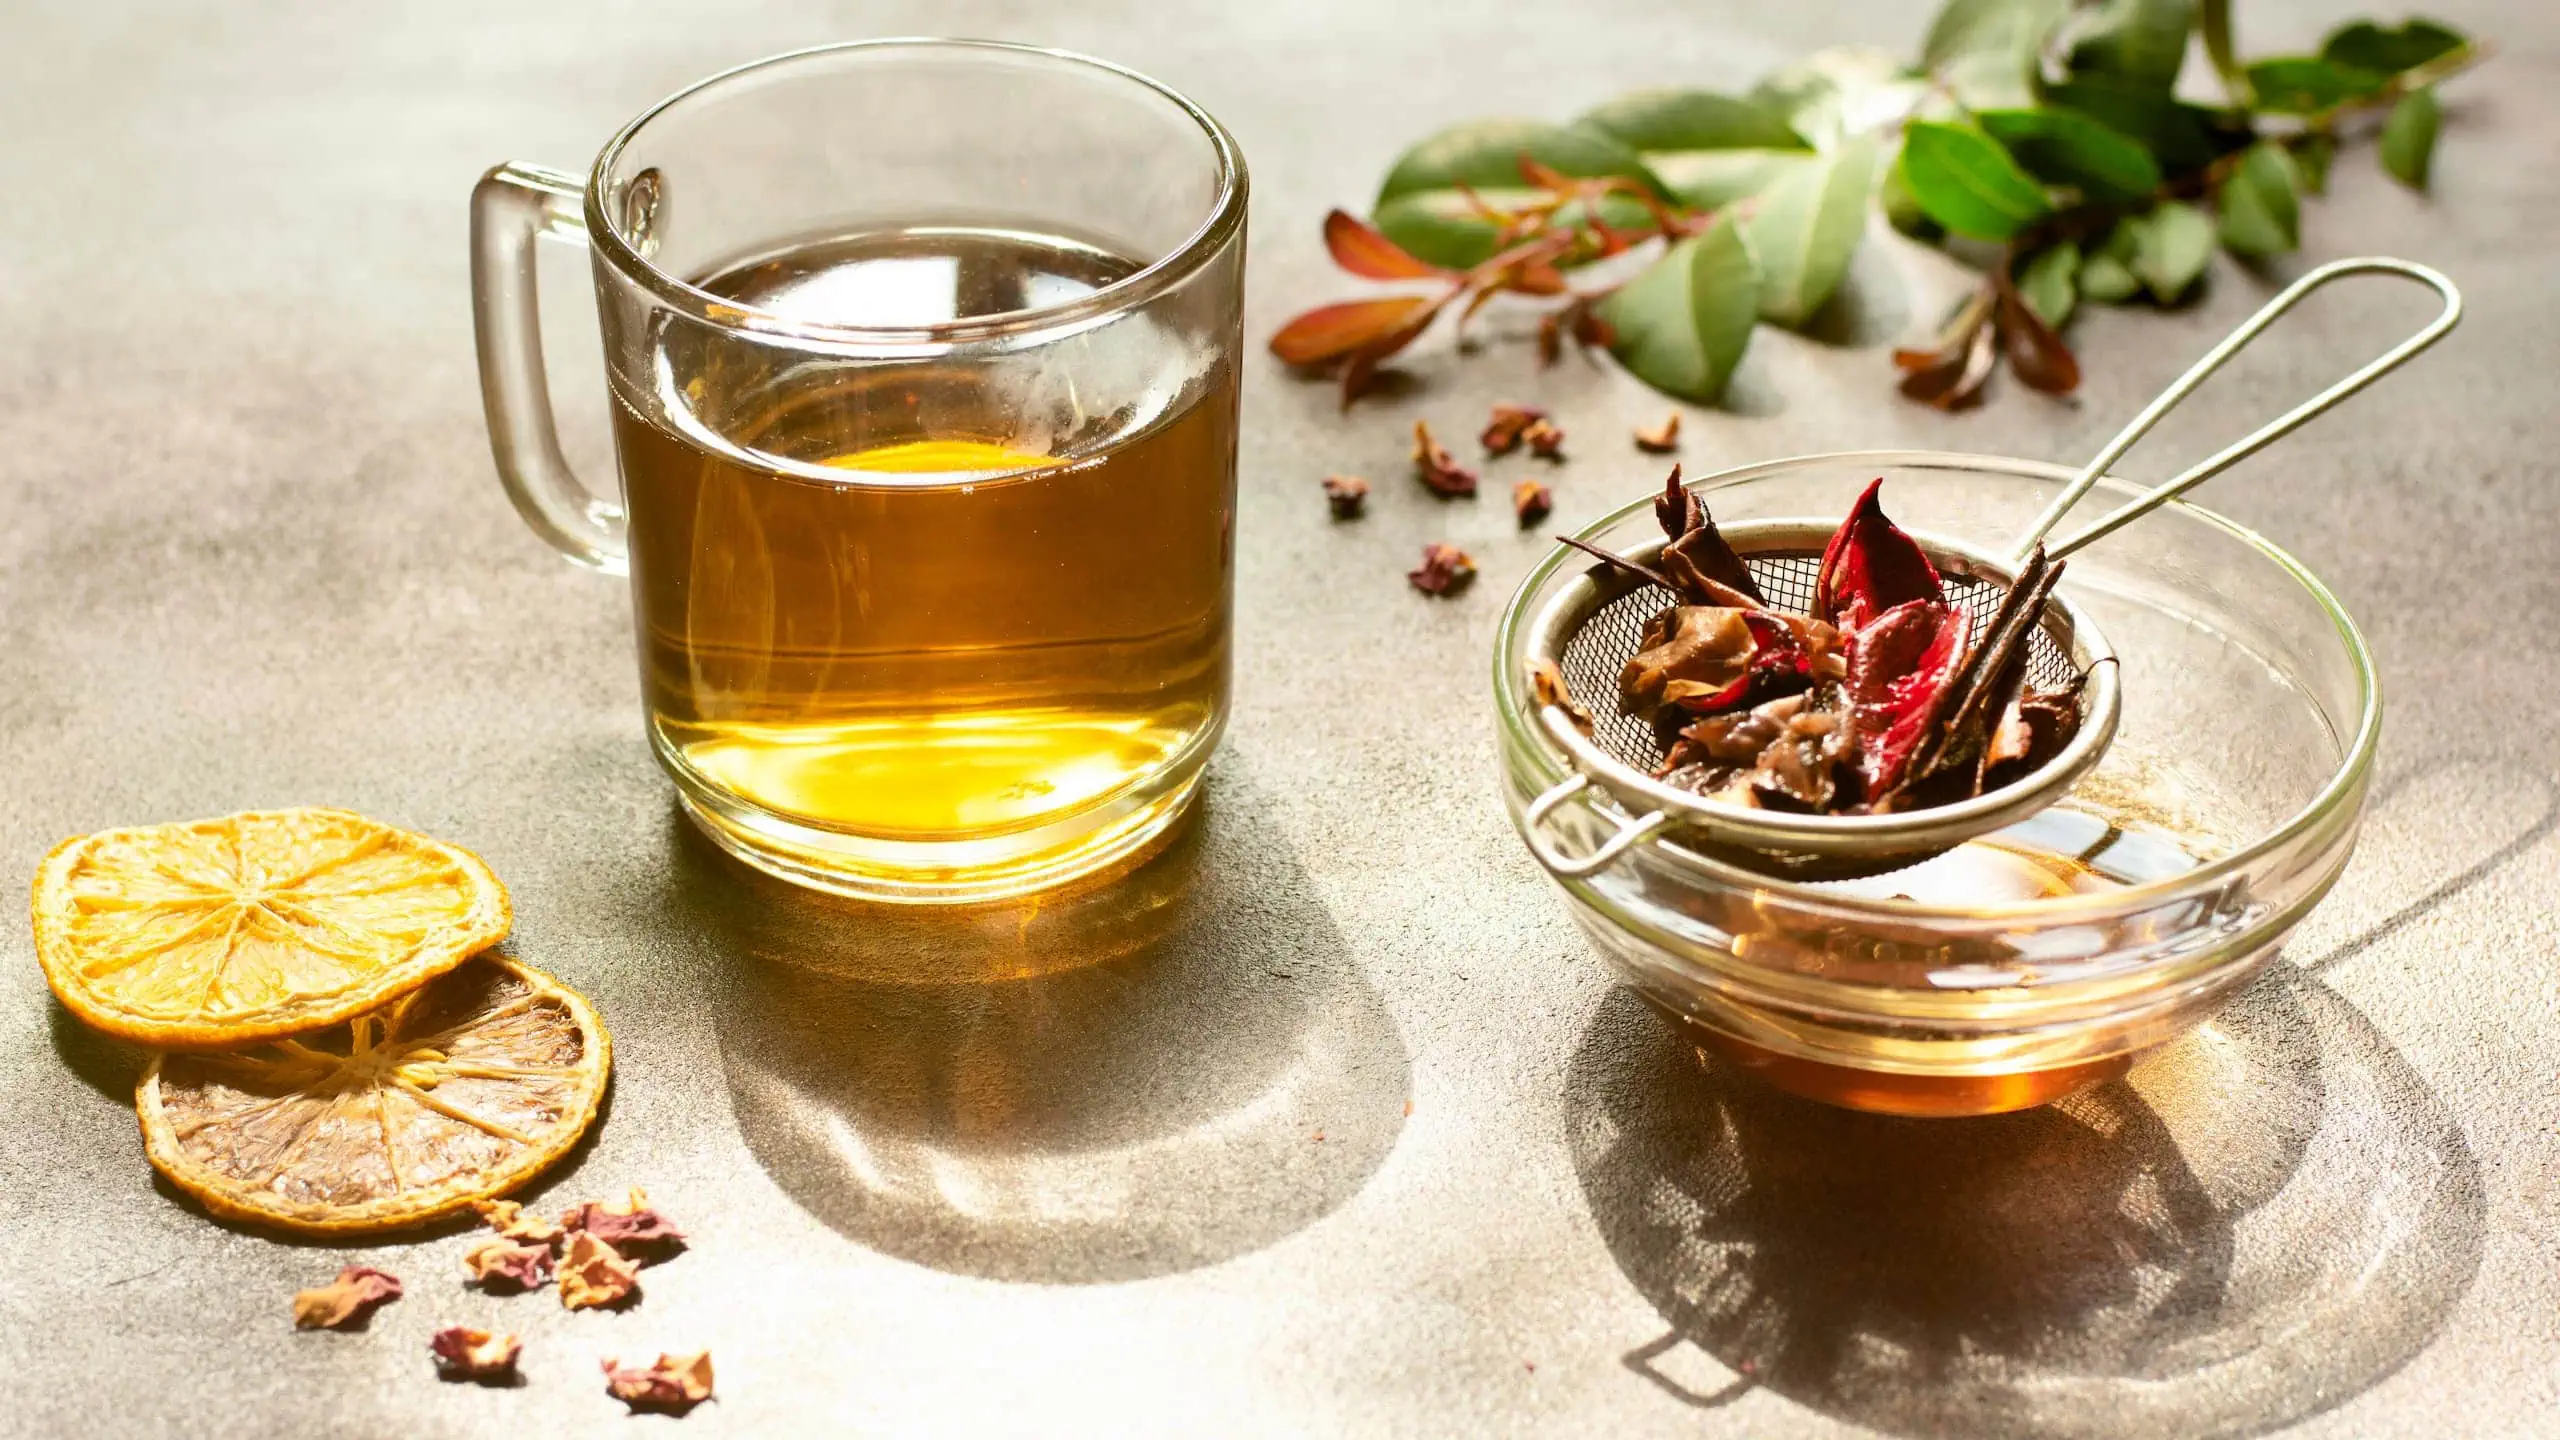 Herbalife tea with dried lemon and herbs